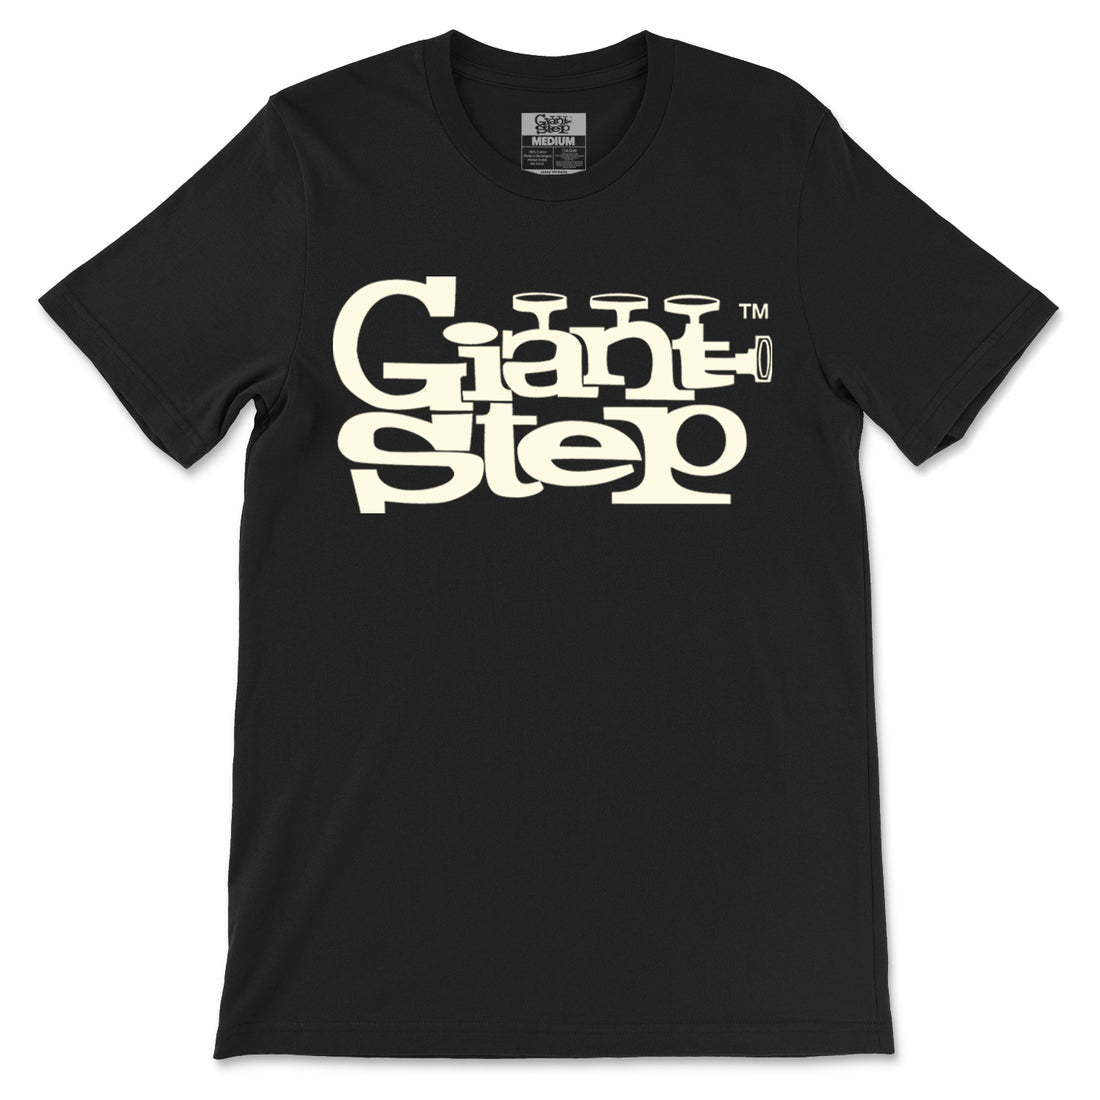 Giant Step T-Shirt Black